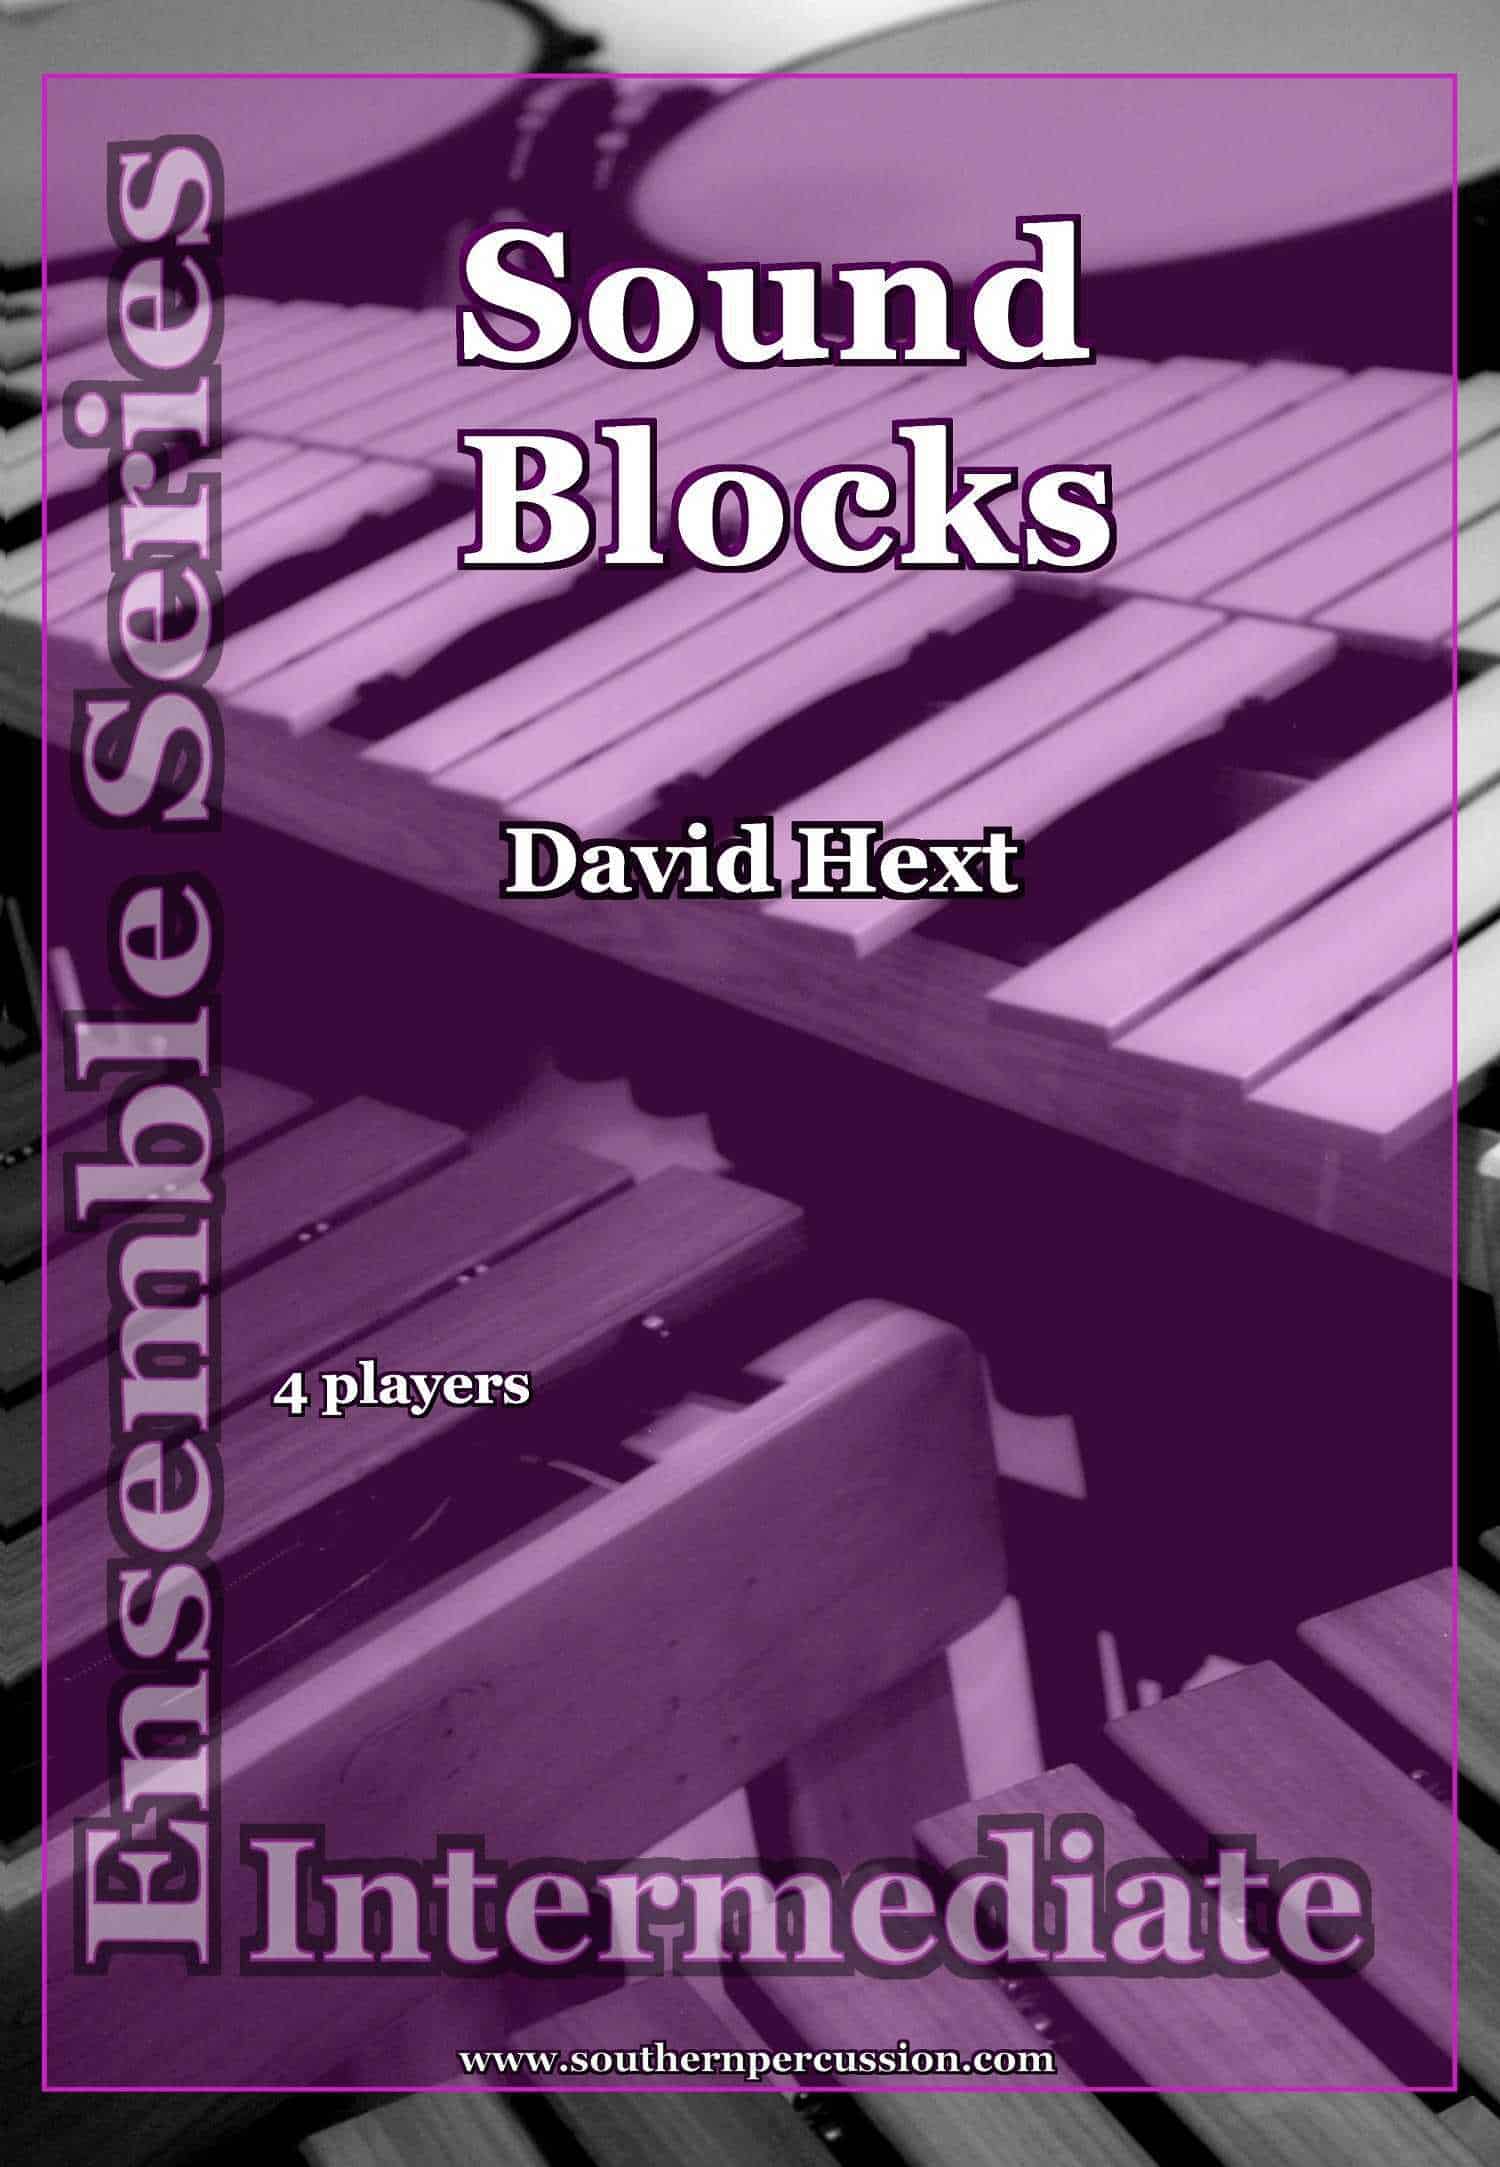 Sound Blocks by David Hext (pre-order)